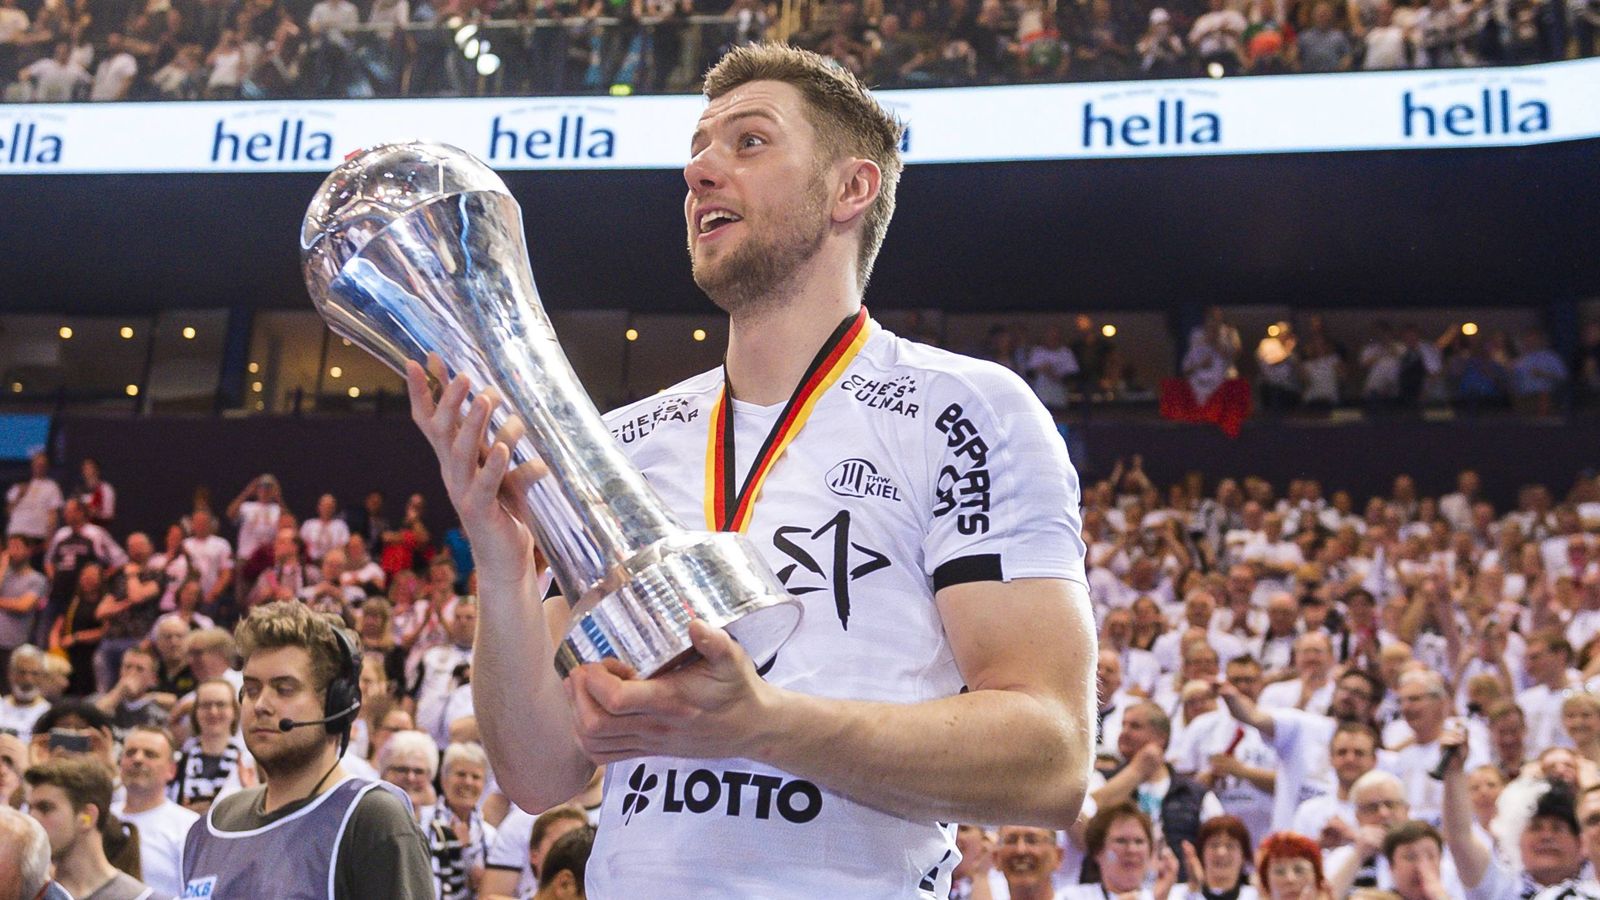 Final4-Turnier des DHB-Pokal auf 2021 verlegt Handball News Sky Sport